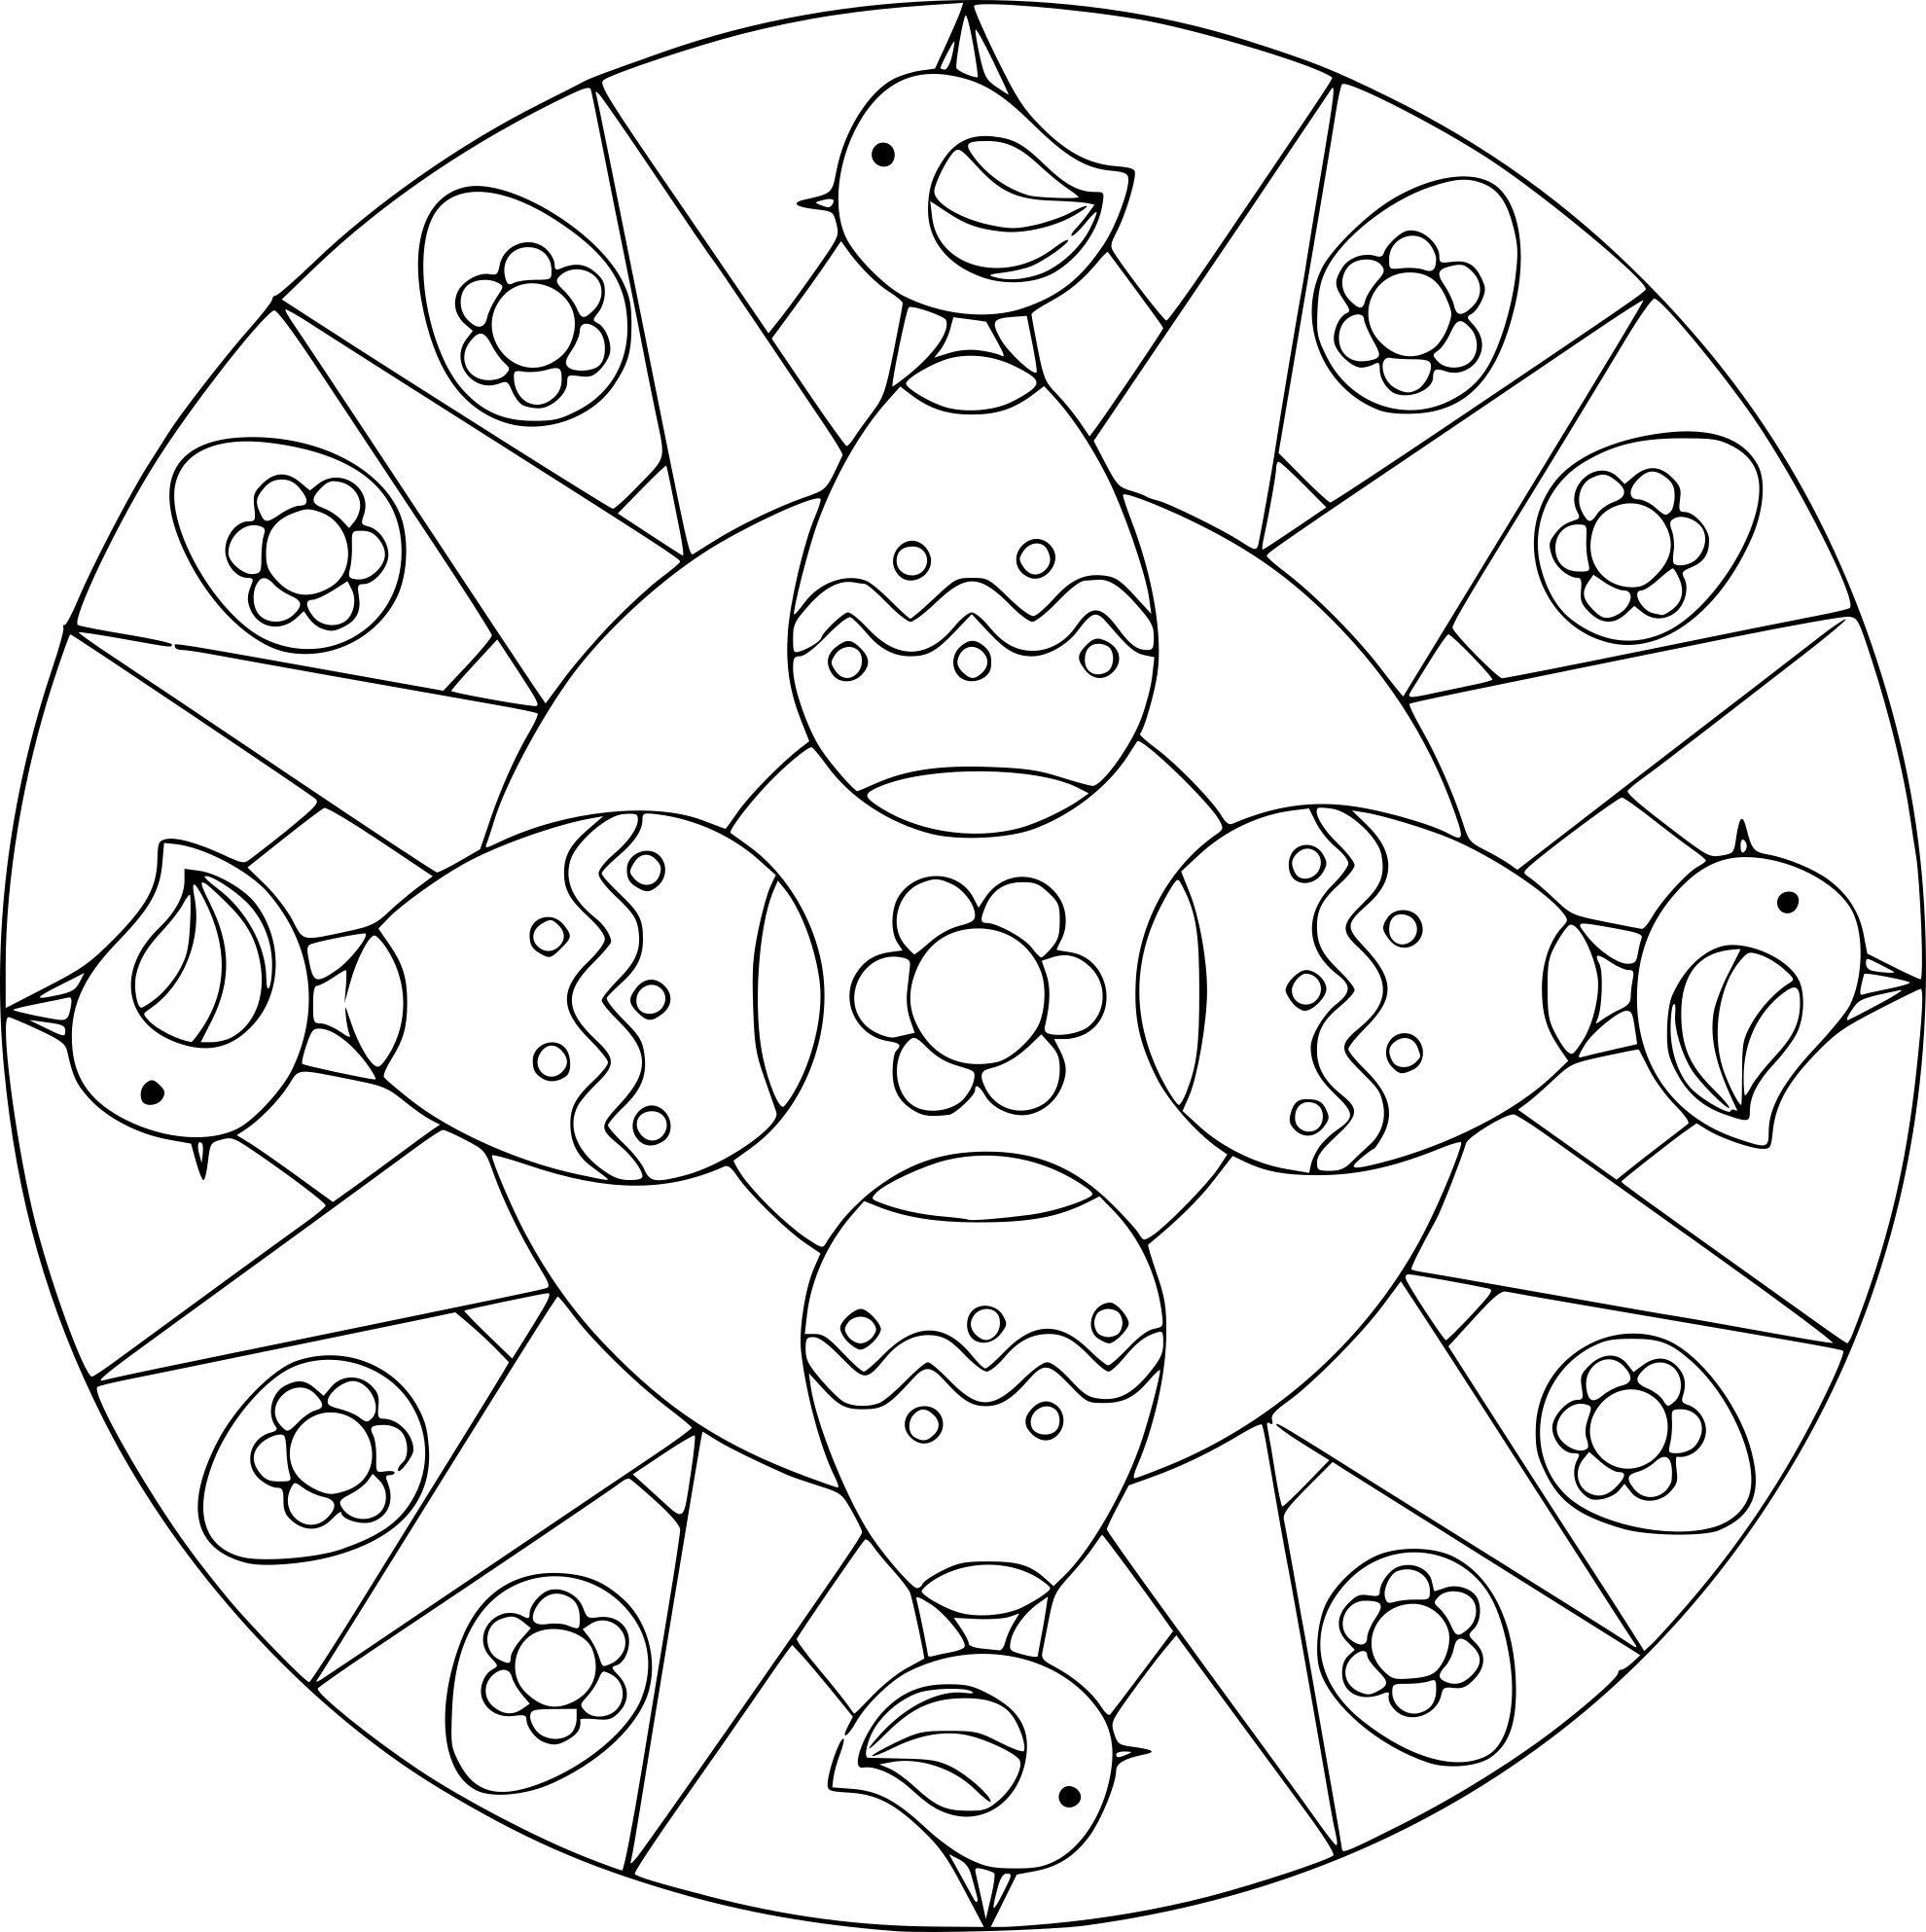 Easter Mandala coloring page